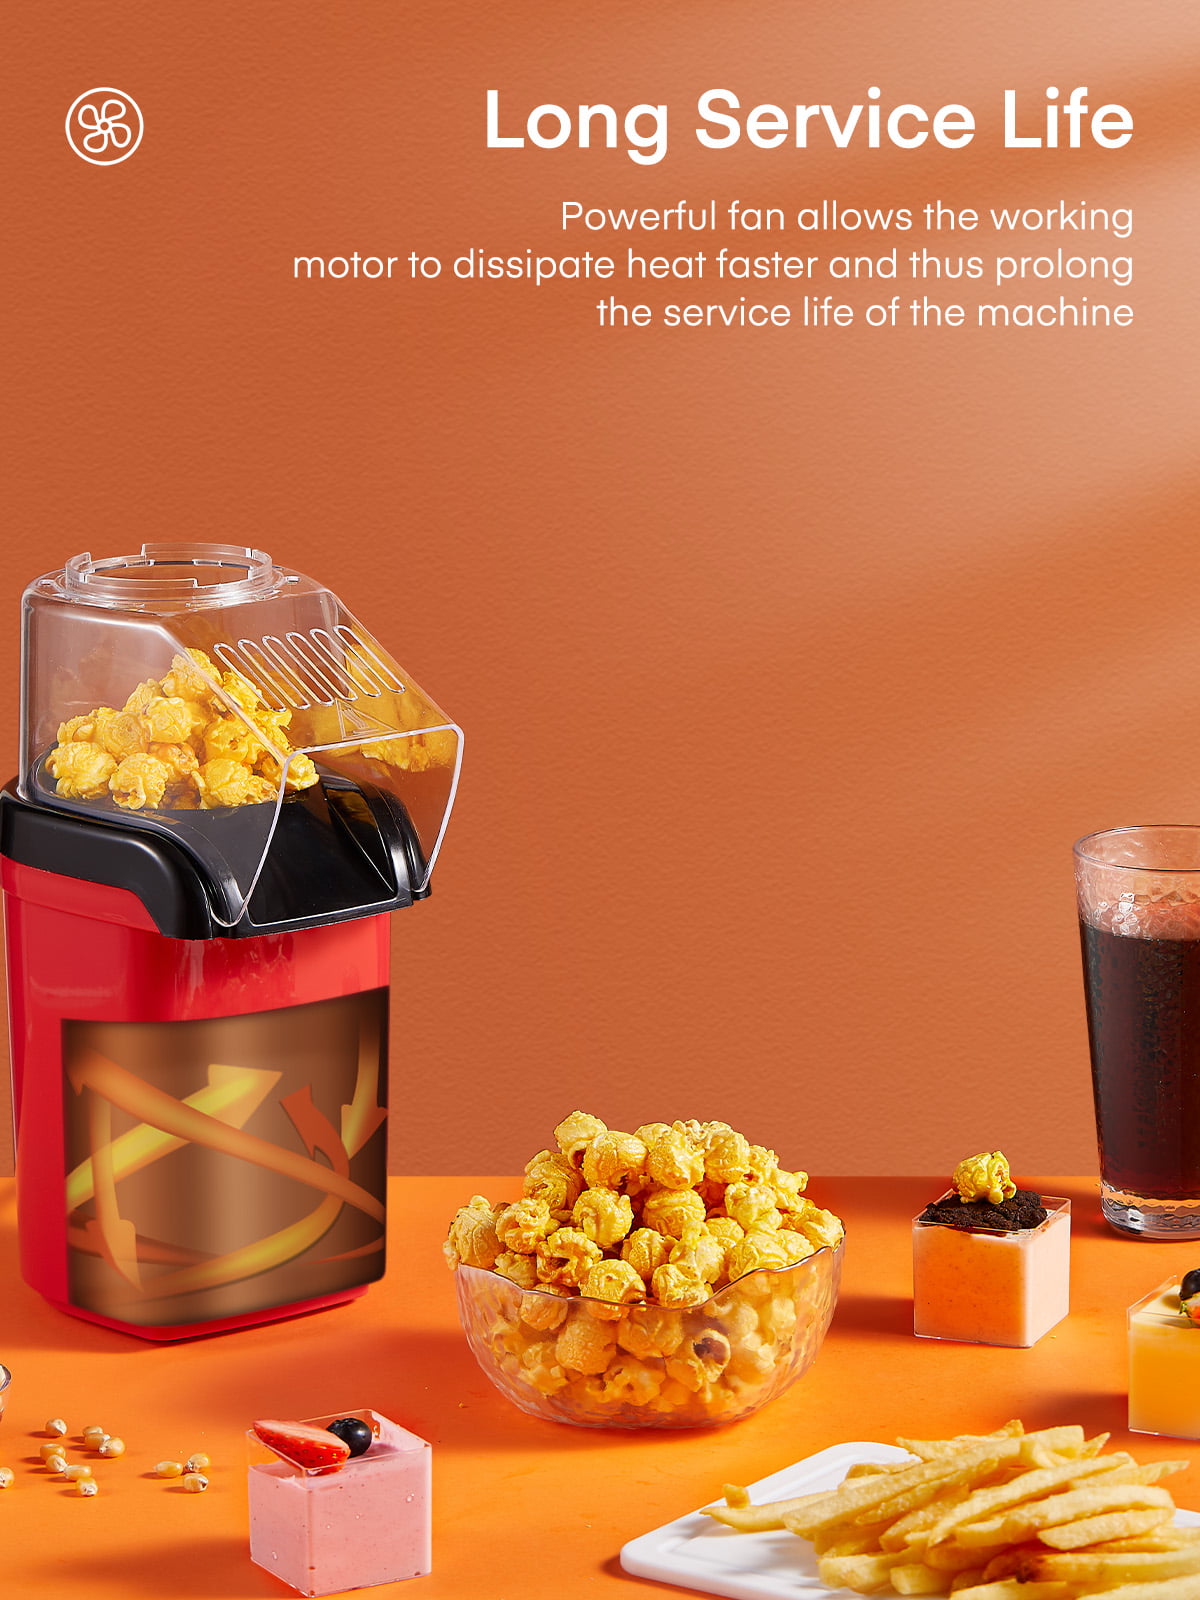 AICOOK Electric Nostalgia Hot Air Popcorn Popper, 1200W, Retro Household,  Low-Calorie & Fat-Free